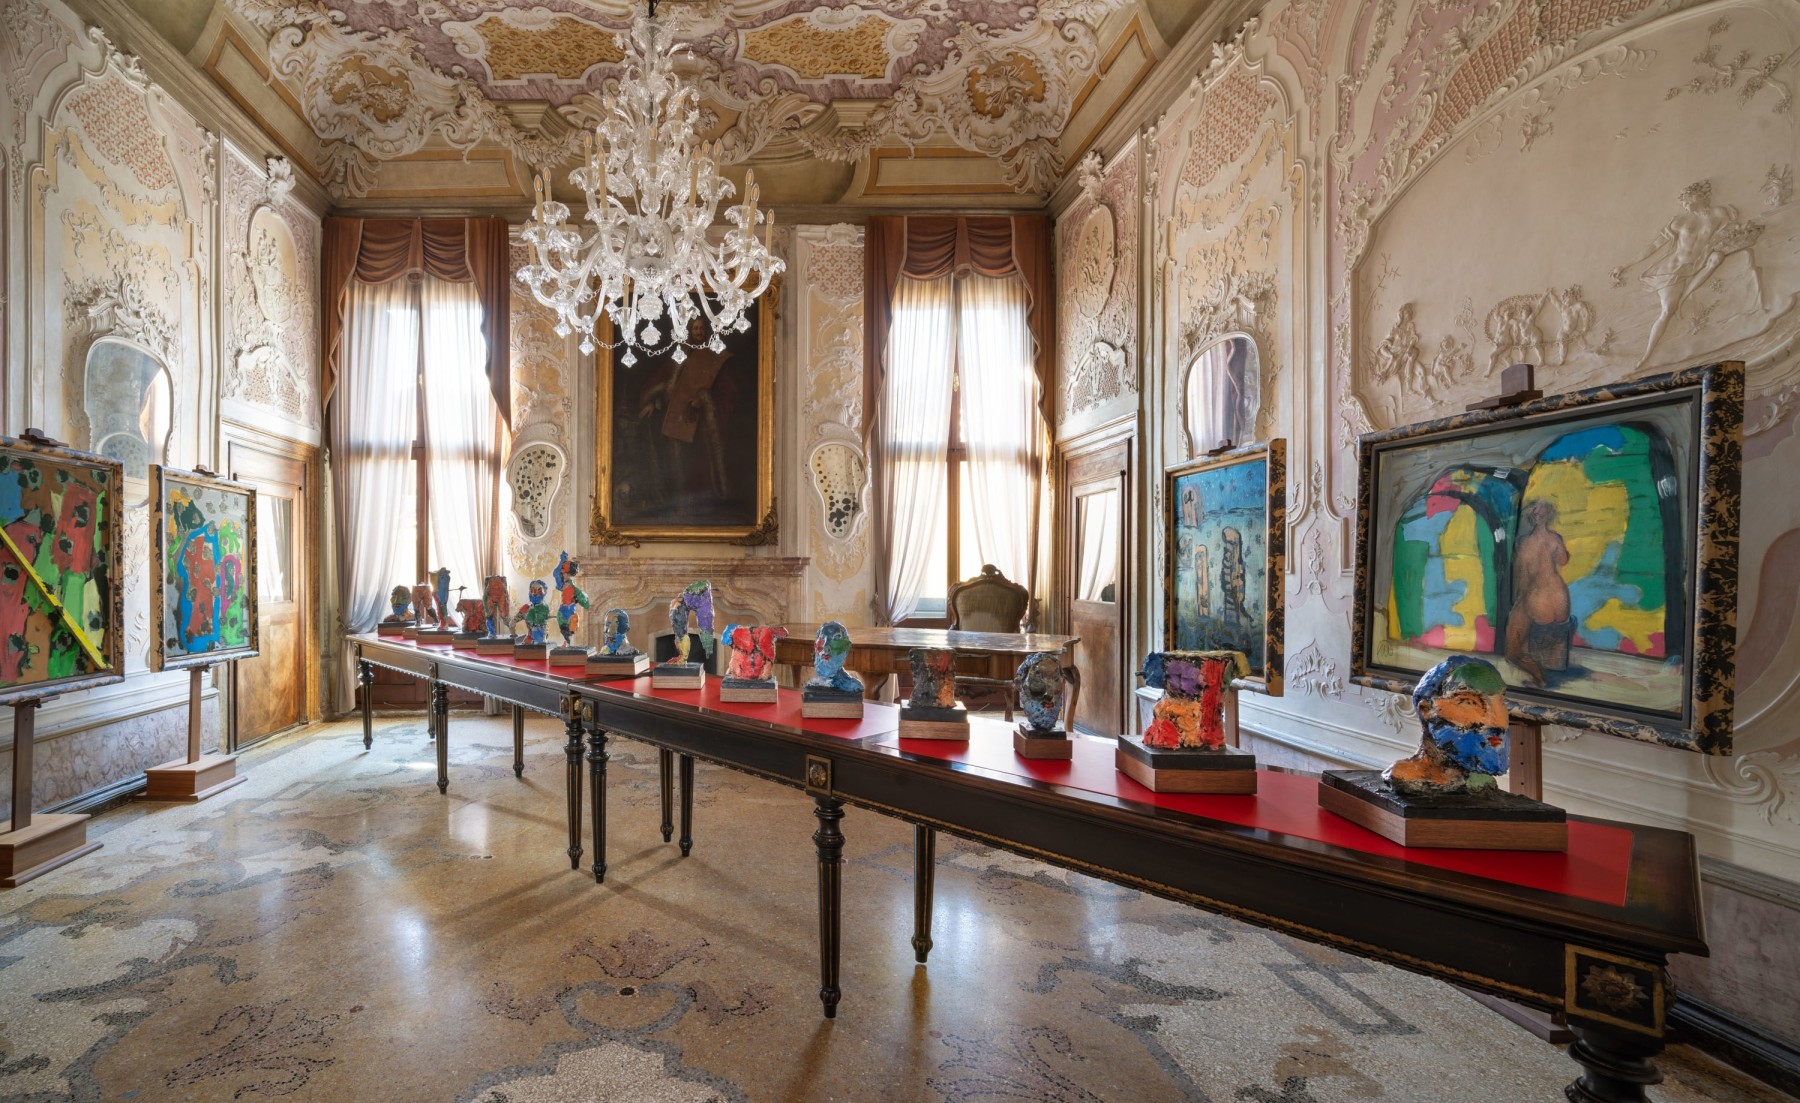 Markus Lüpertz - Palazzo Loredan, Venice - Viewing Room - Michael Werner Gallery, New York and London